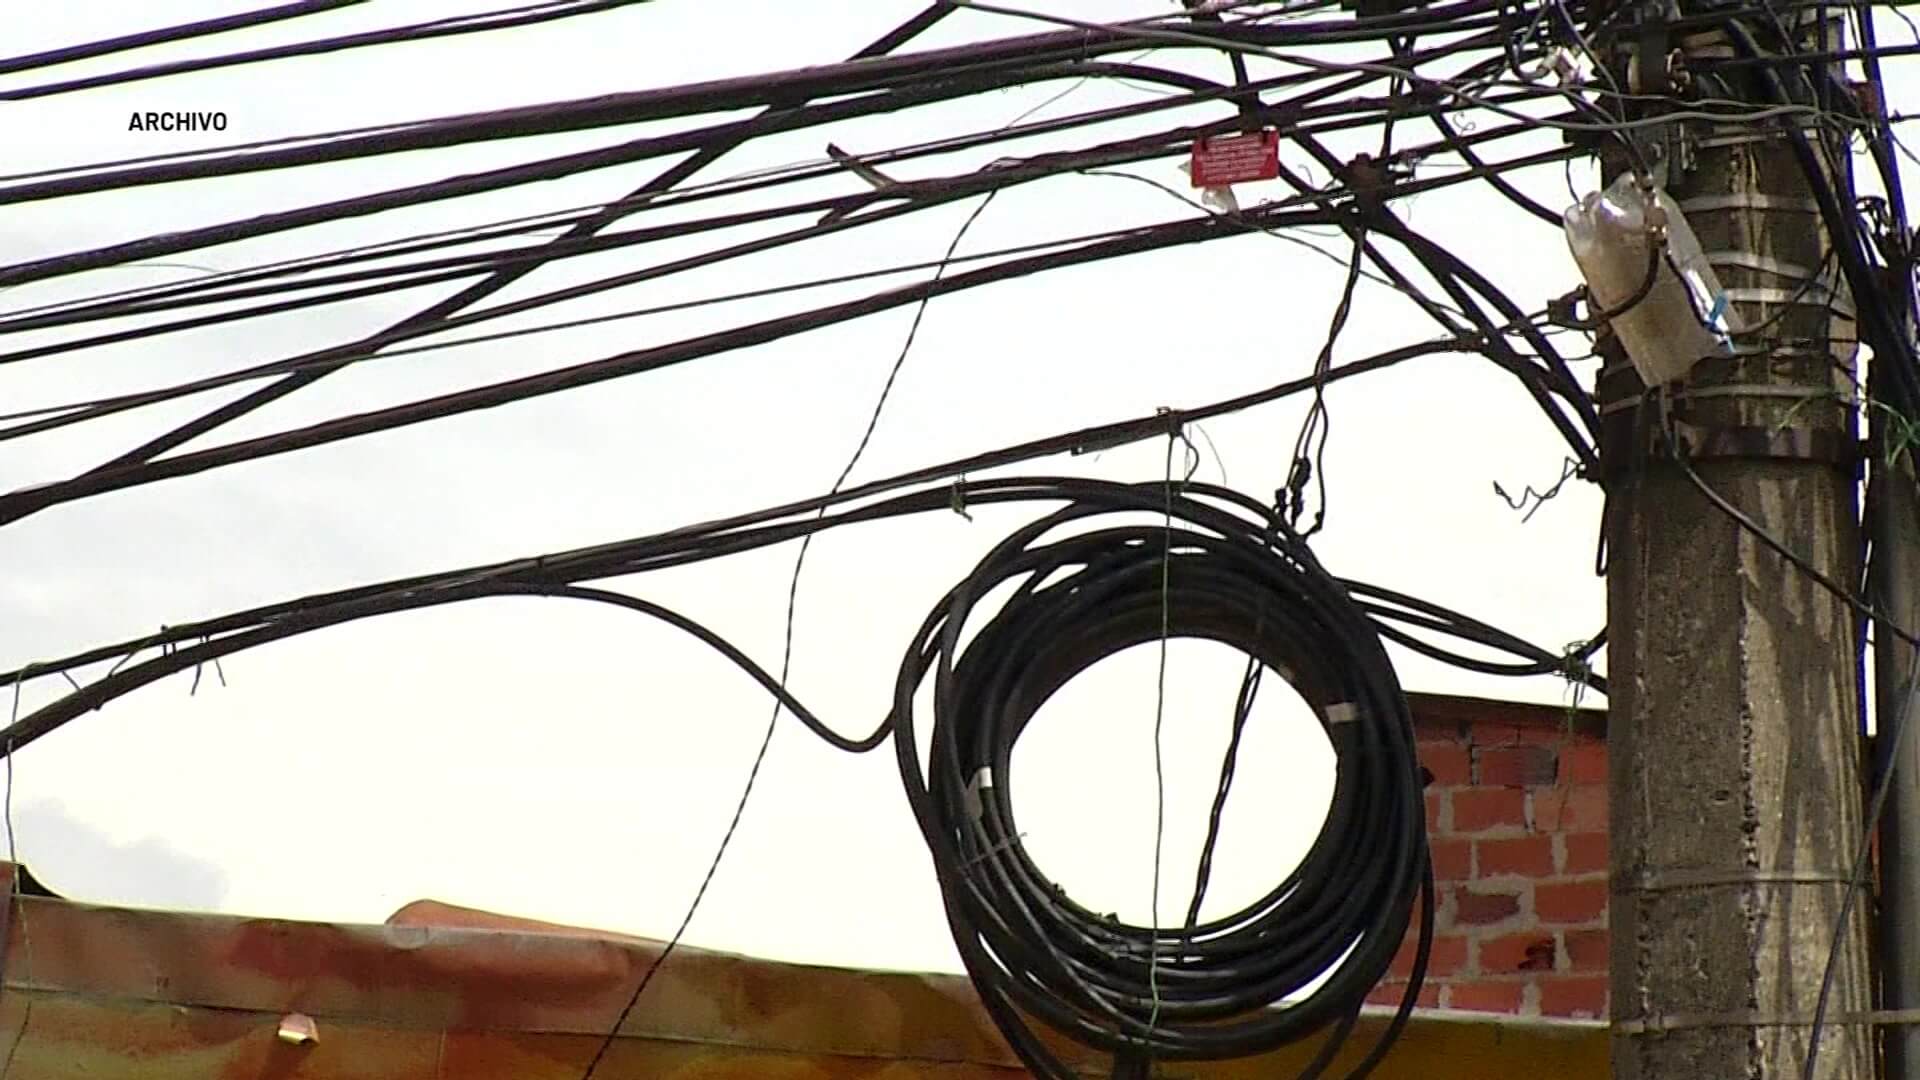 Hurto de cable de cobre aumentó 200 % en el Valle de Aburrá